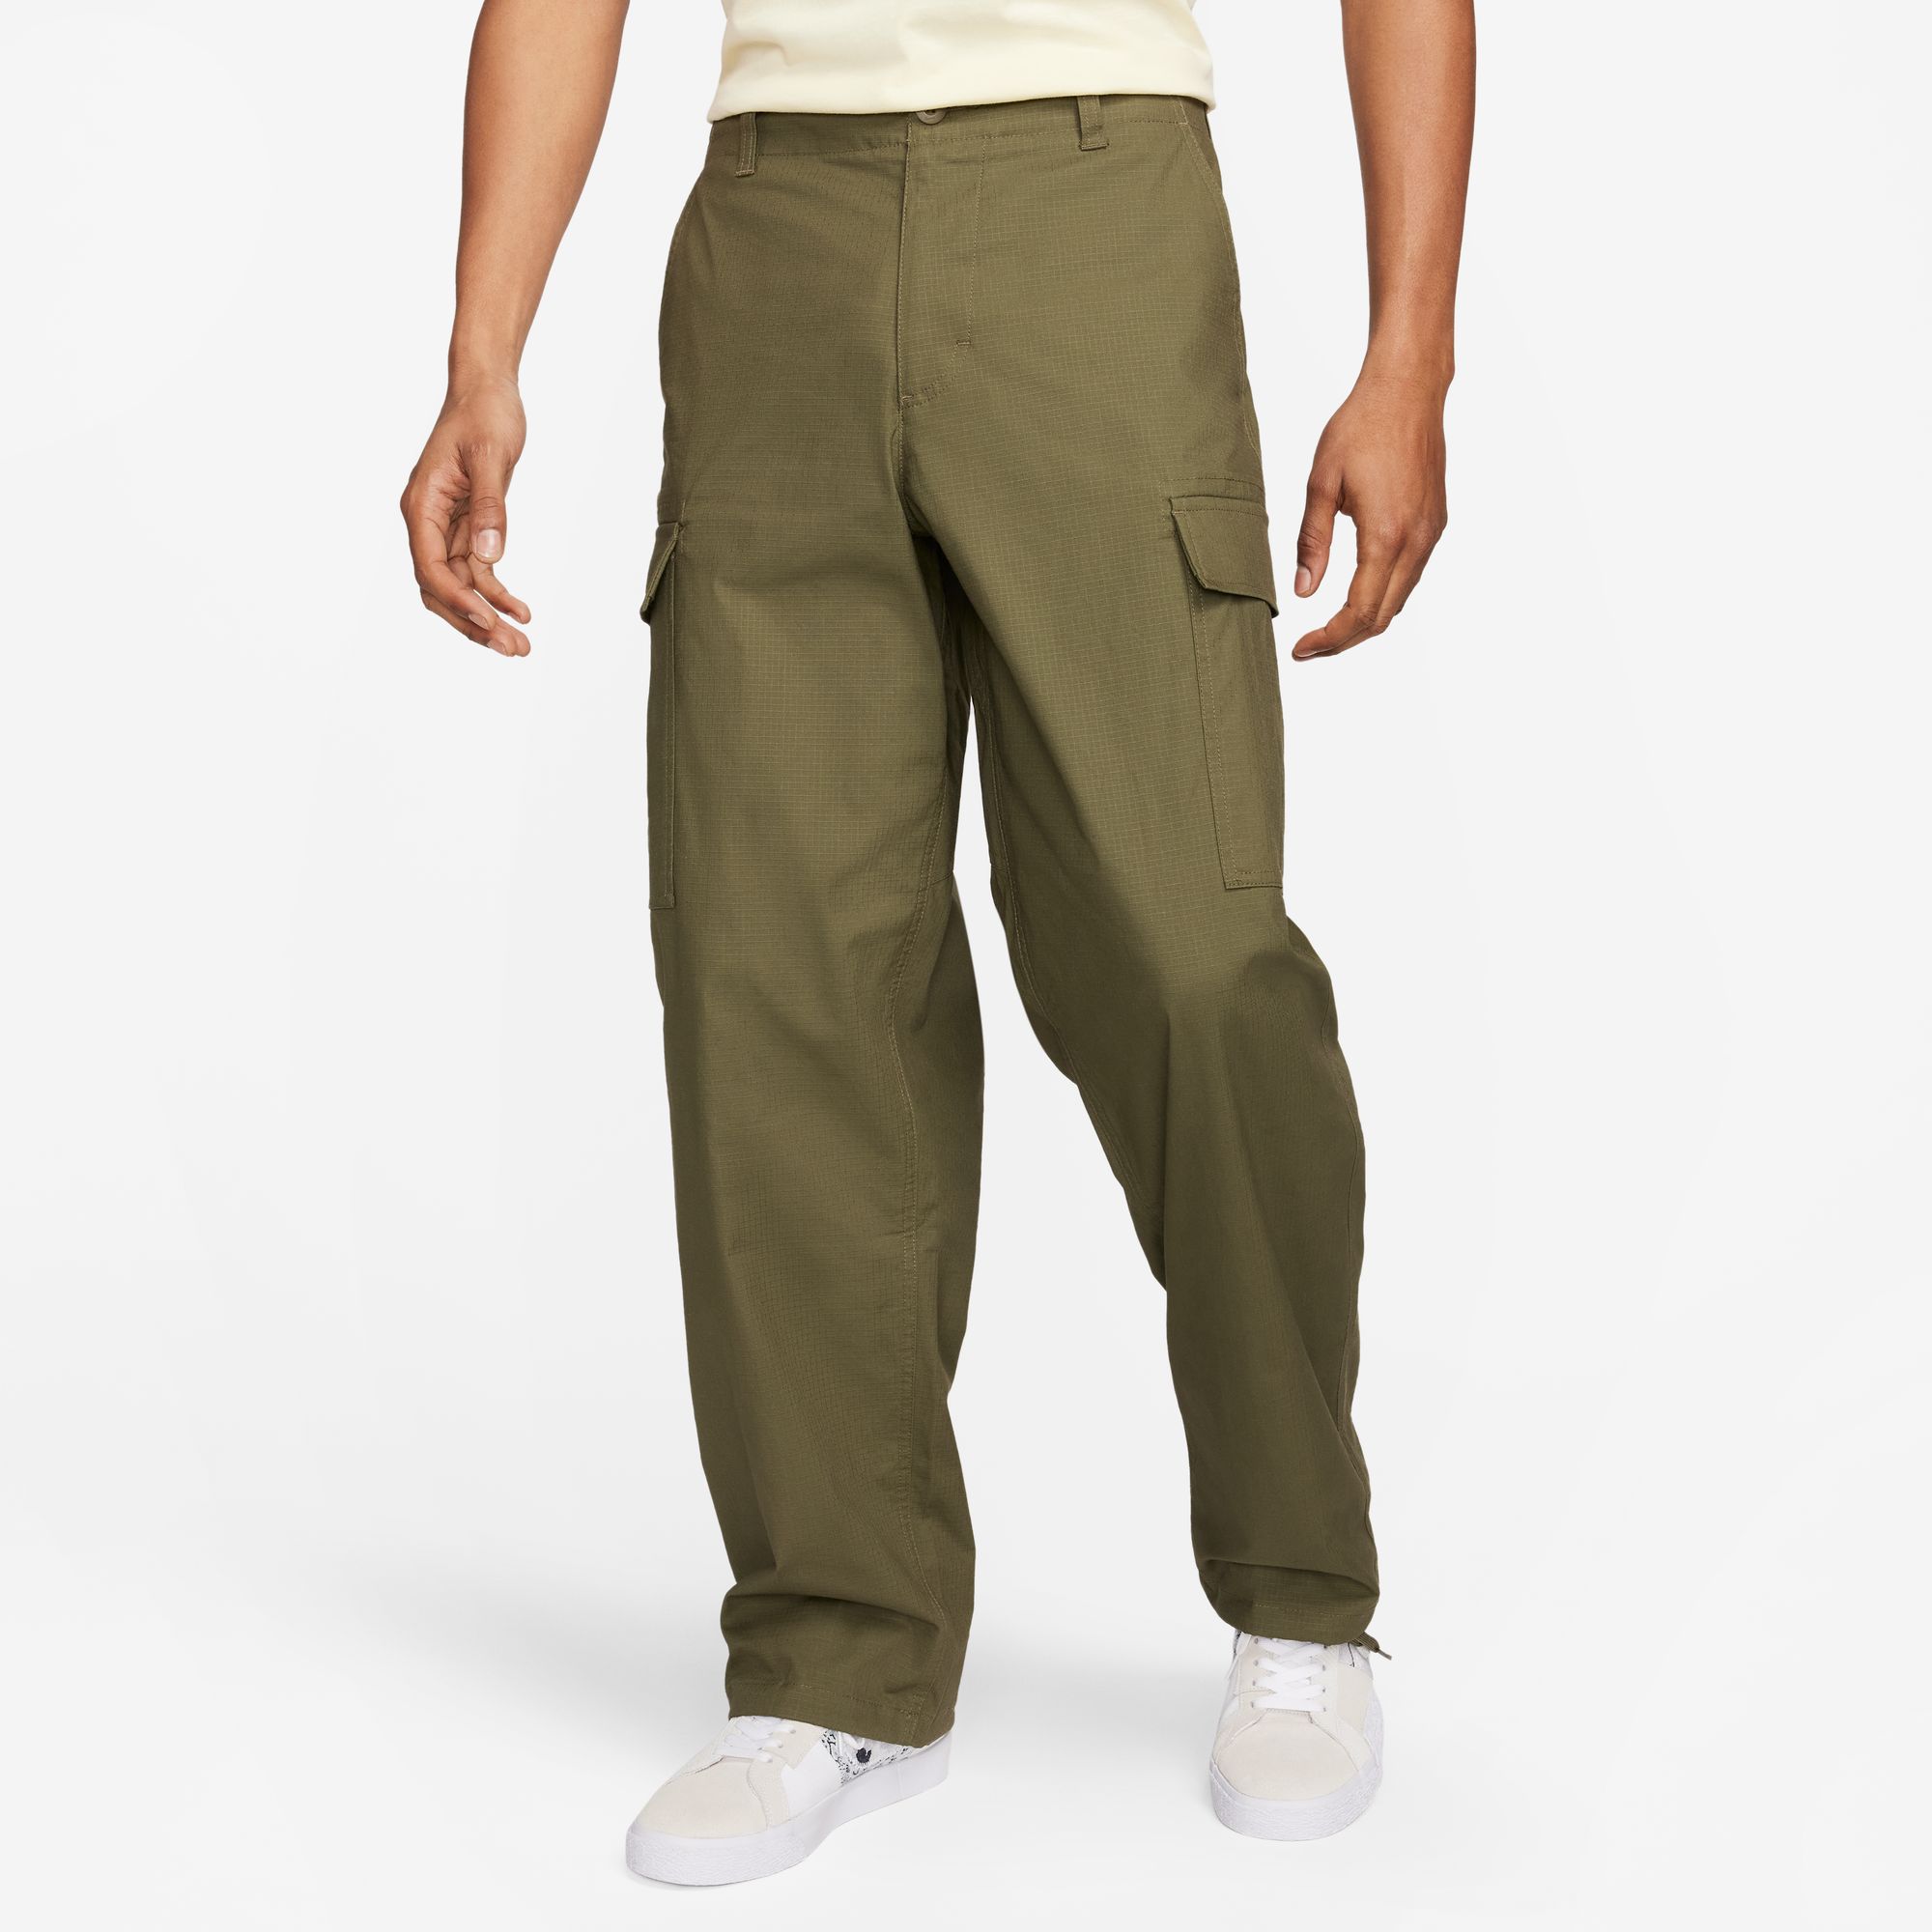 Nike SB Kearny Men's Cargo Skate Pants Medium Olive